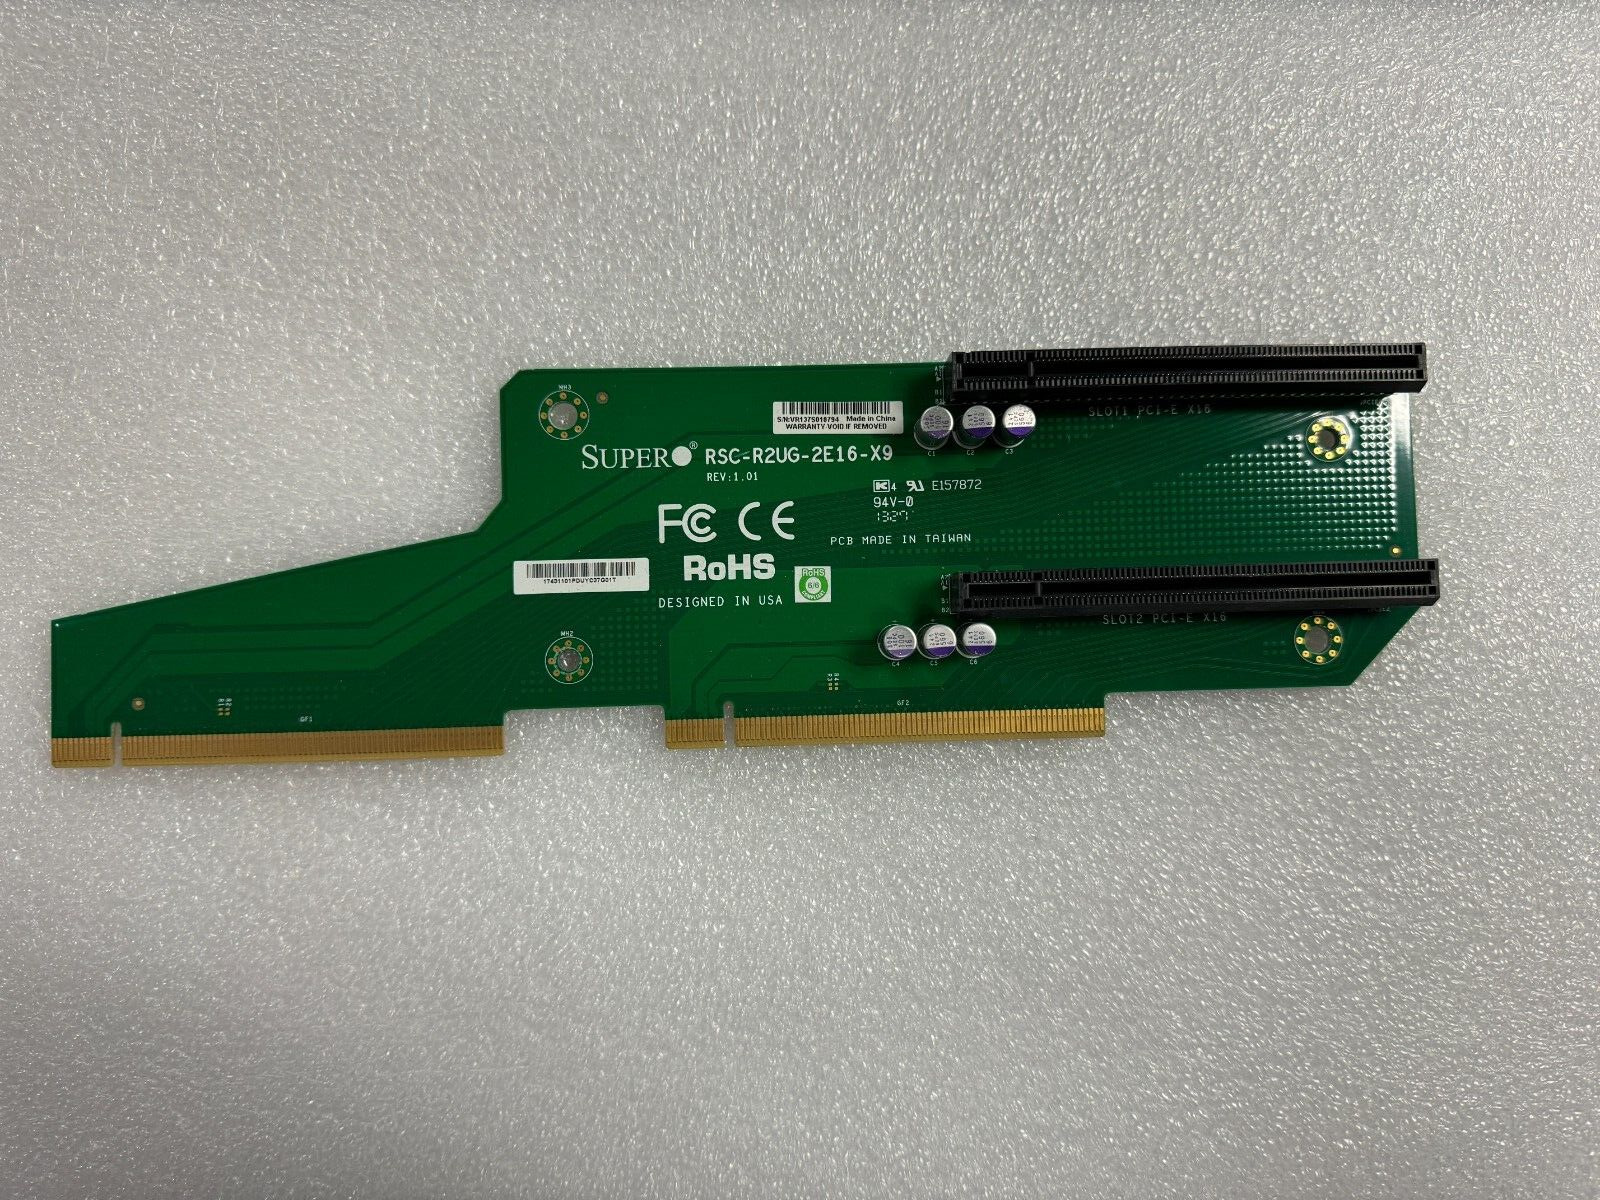 SuperMicro RSC-R2UG-2E16-X9 2-Slot PCI-E X16 Riser Card